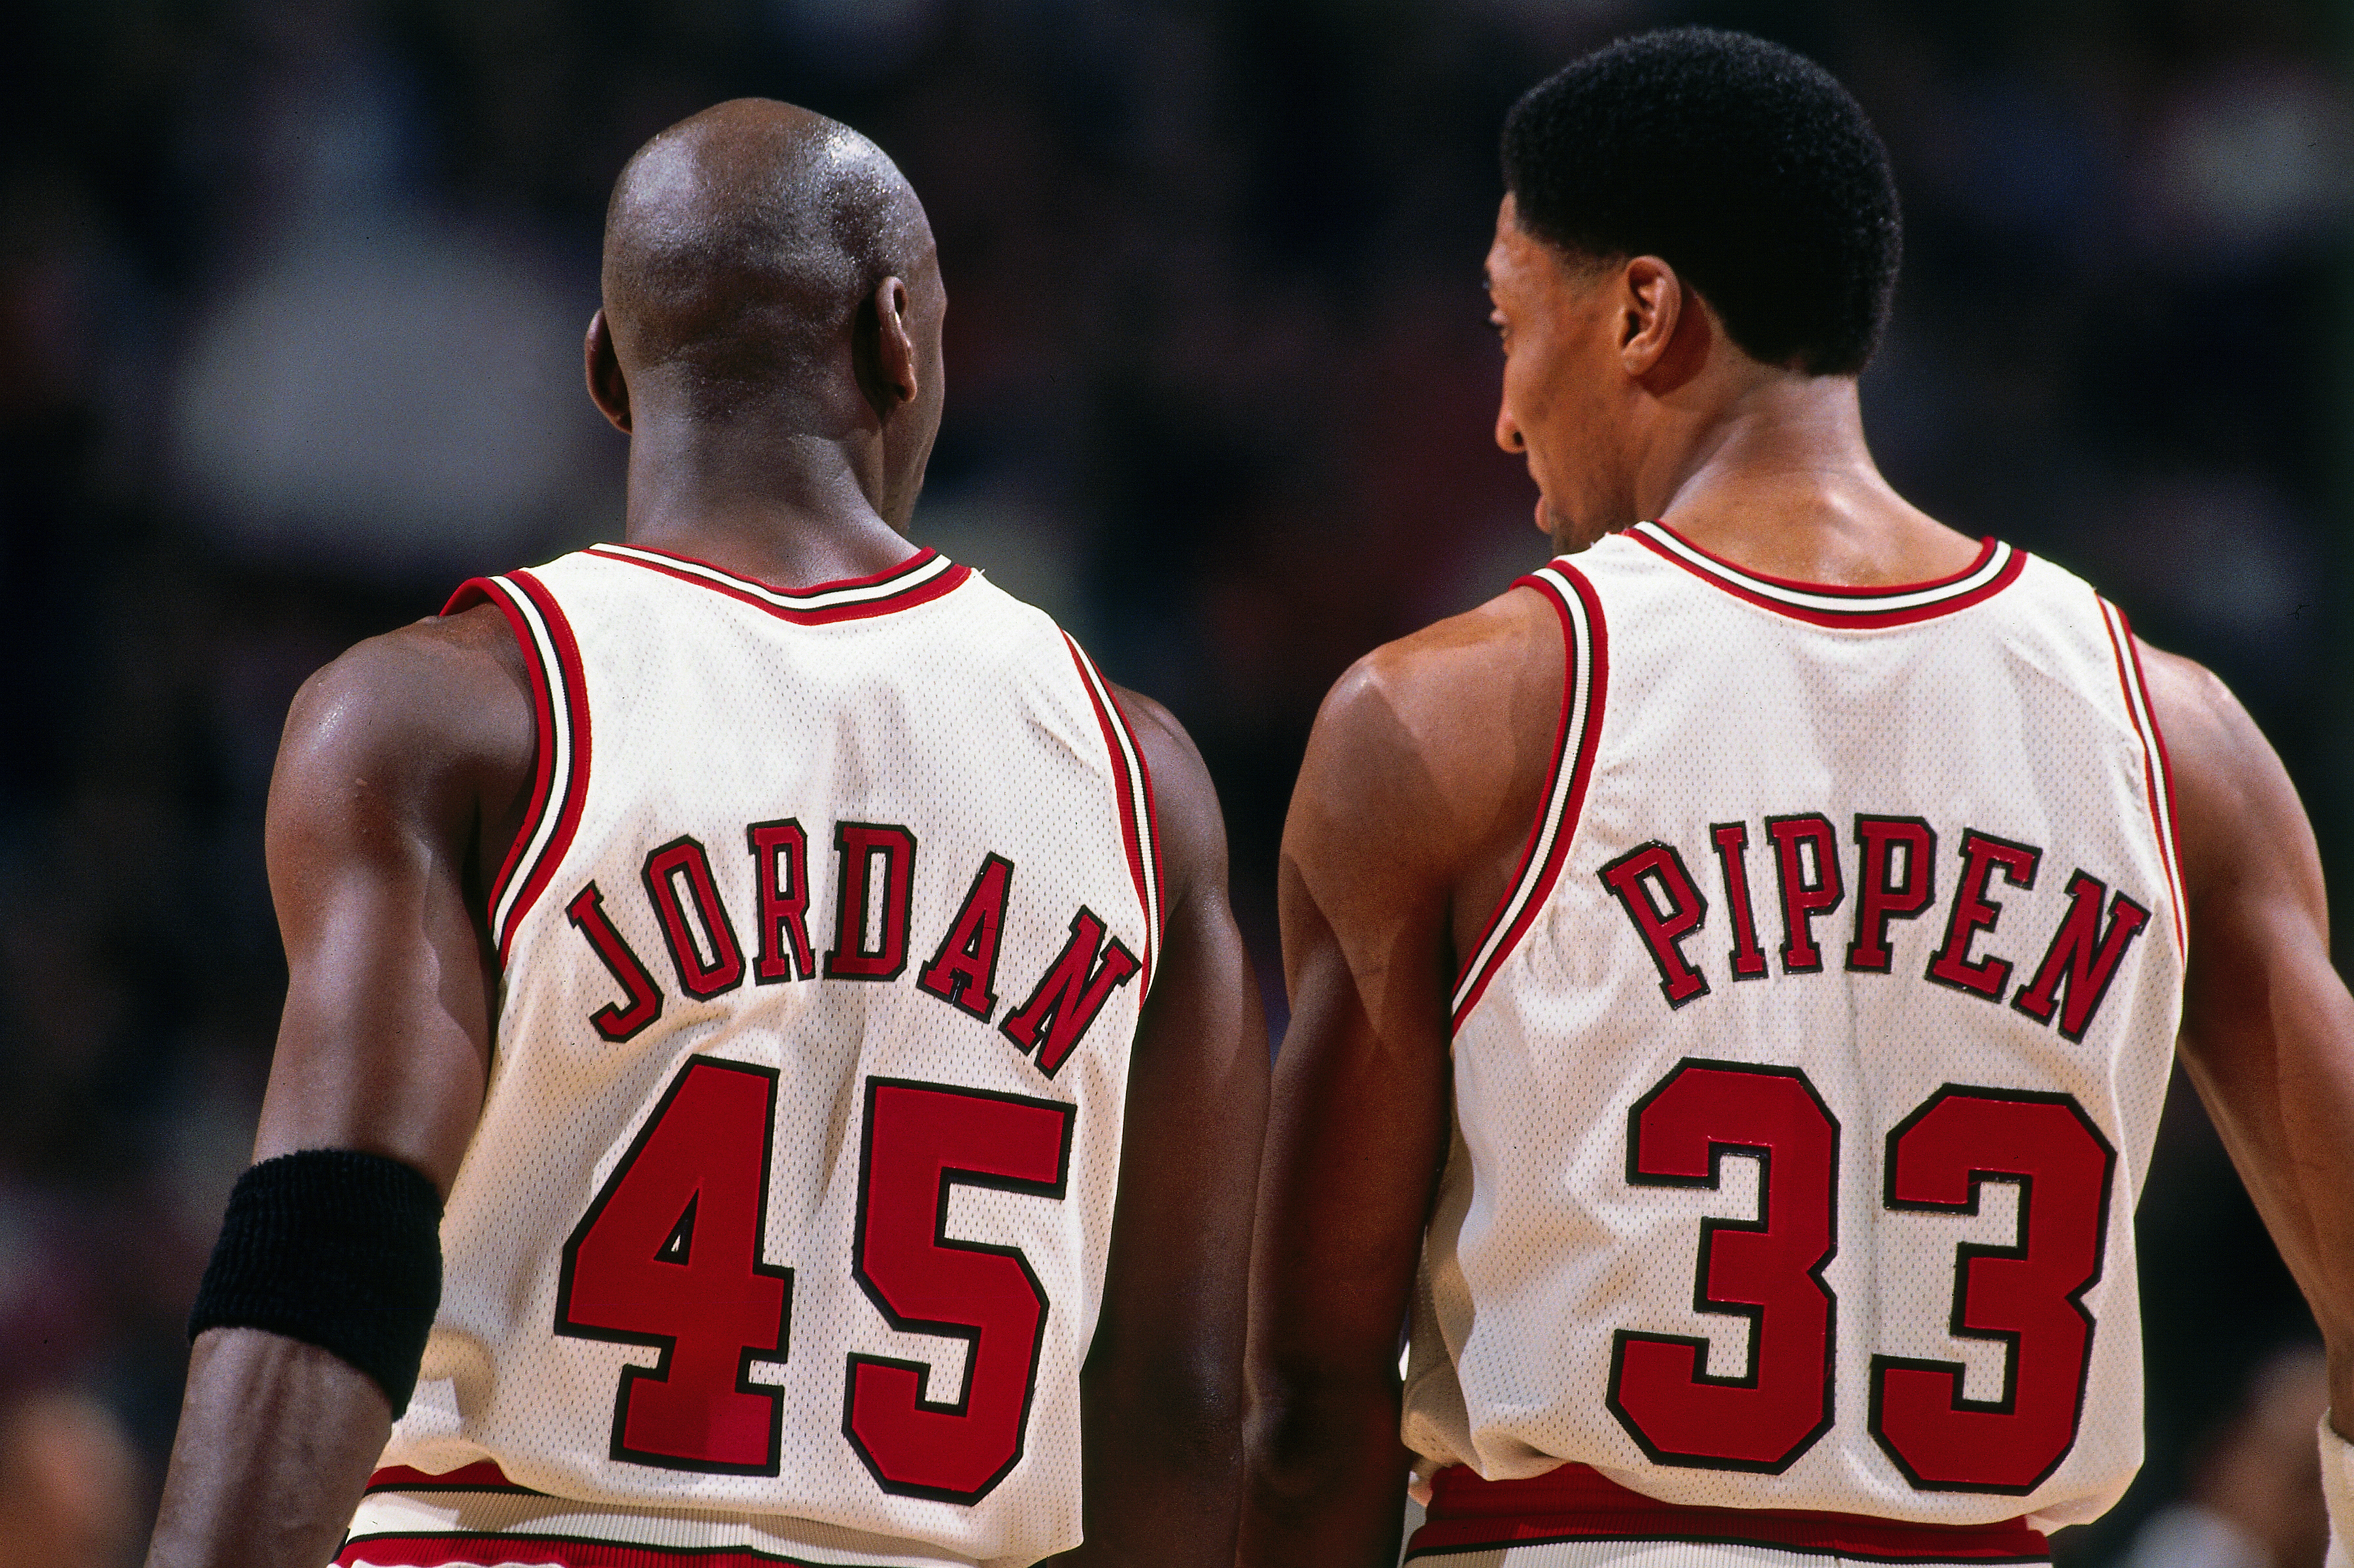 Chicago Bulls: Scottie Pippen and Michael Jordan